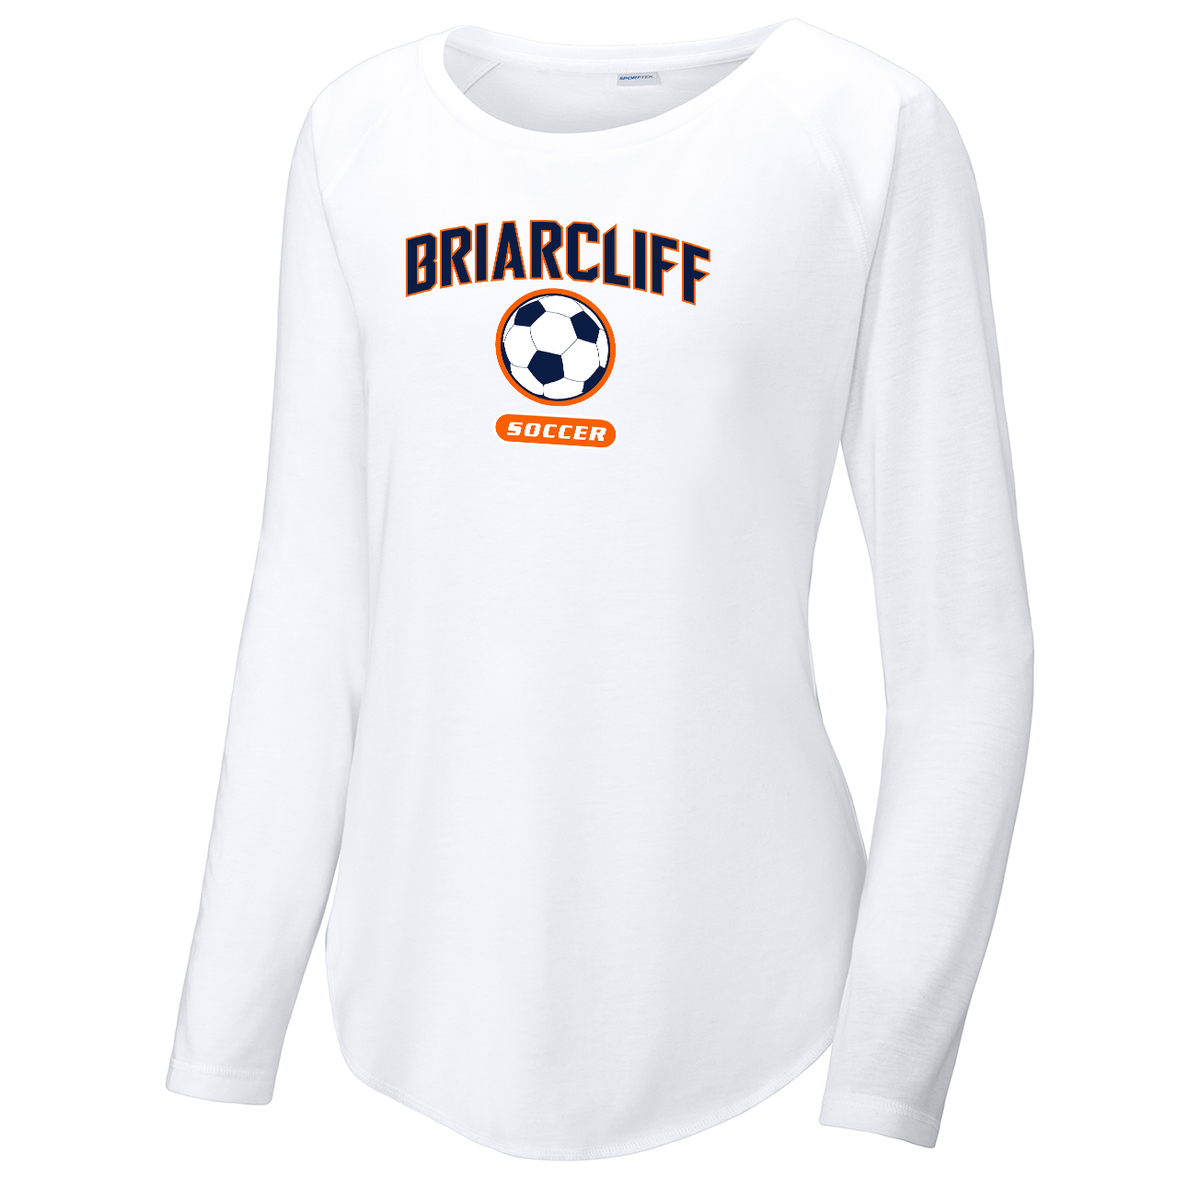 Briarcliff Soccer Women's Raglan Long Sleeve CottonTouch